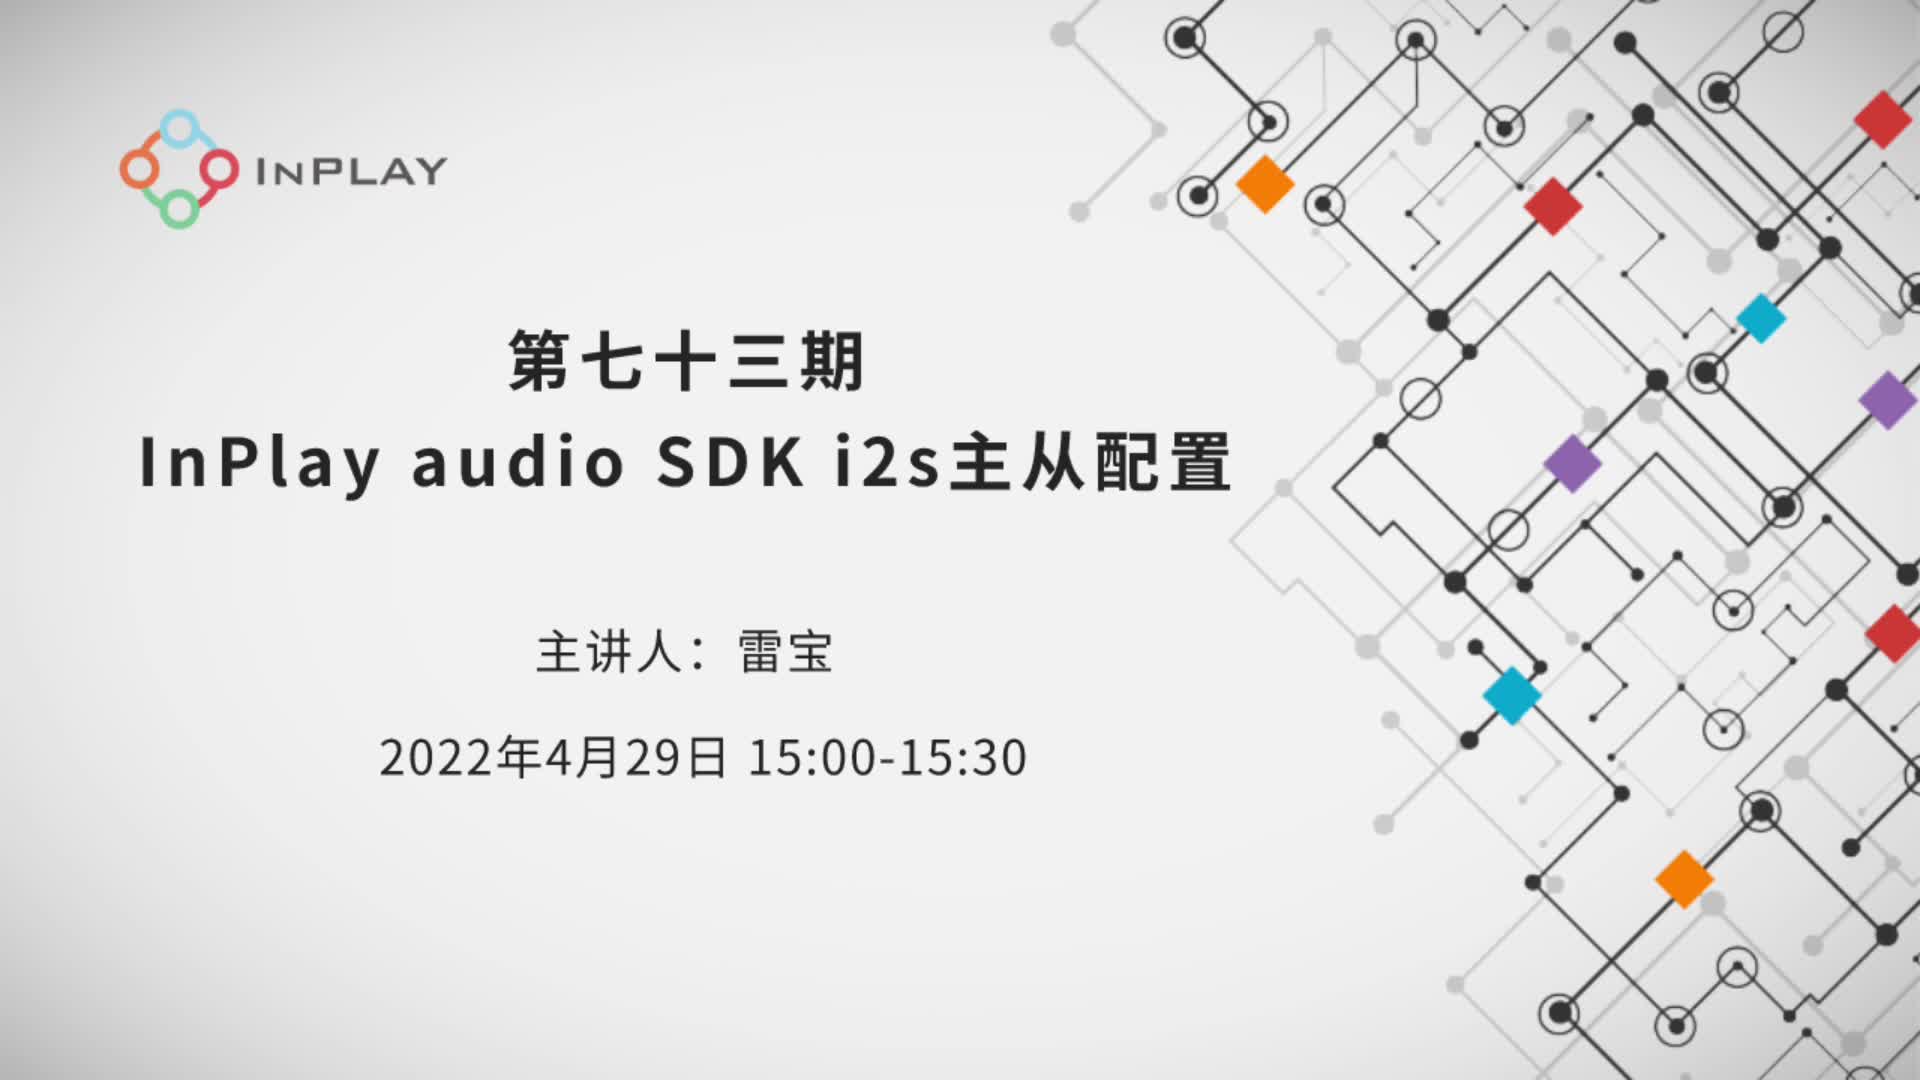 InPlay audio SDK i2s 主从配置